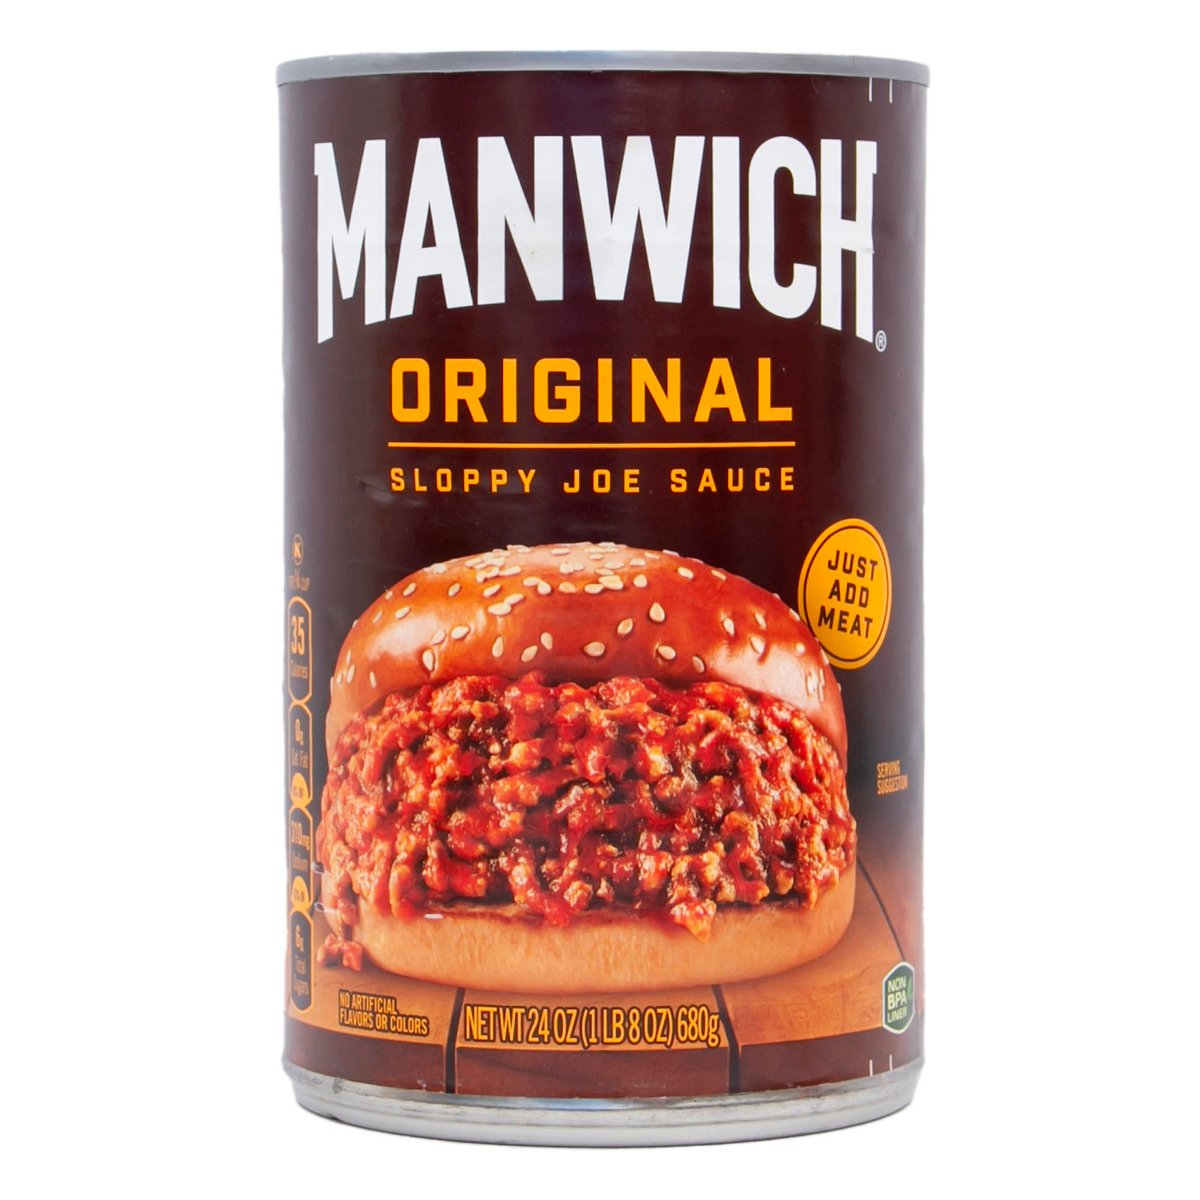 Manwich Sloppy Joe Sauce Original 680 g